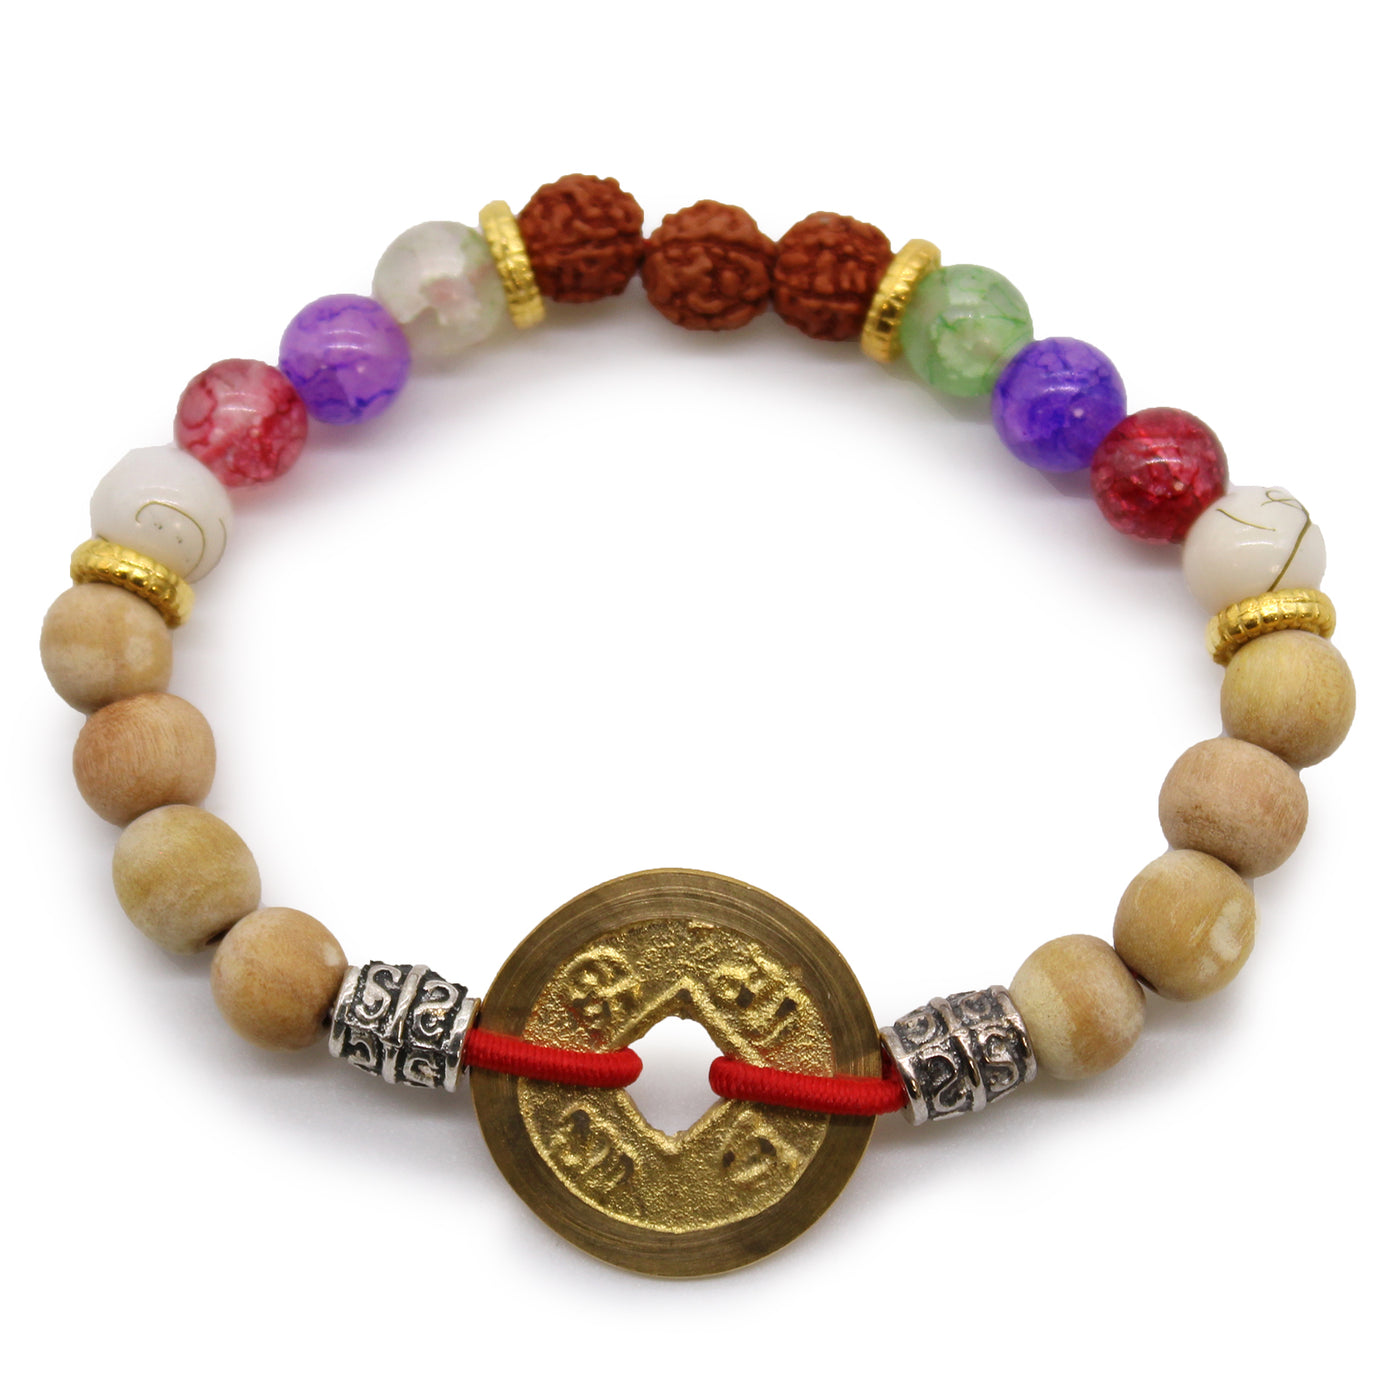 Tri Hita Karana Bangle With Stone Glass & Wooden Beads - Believe